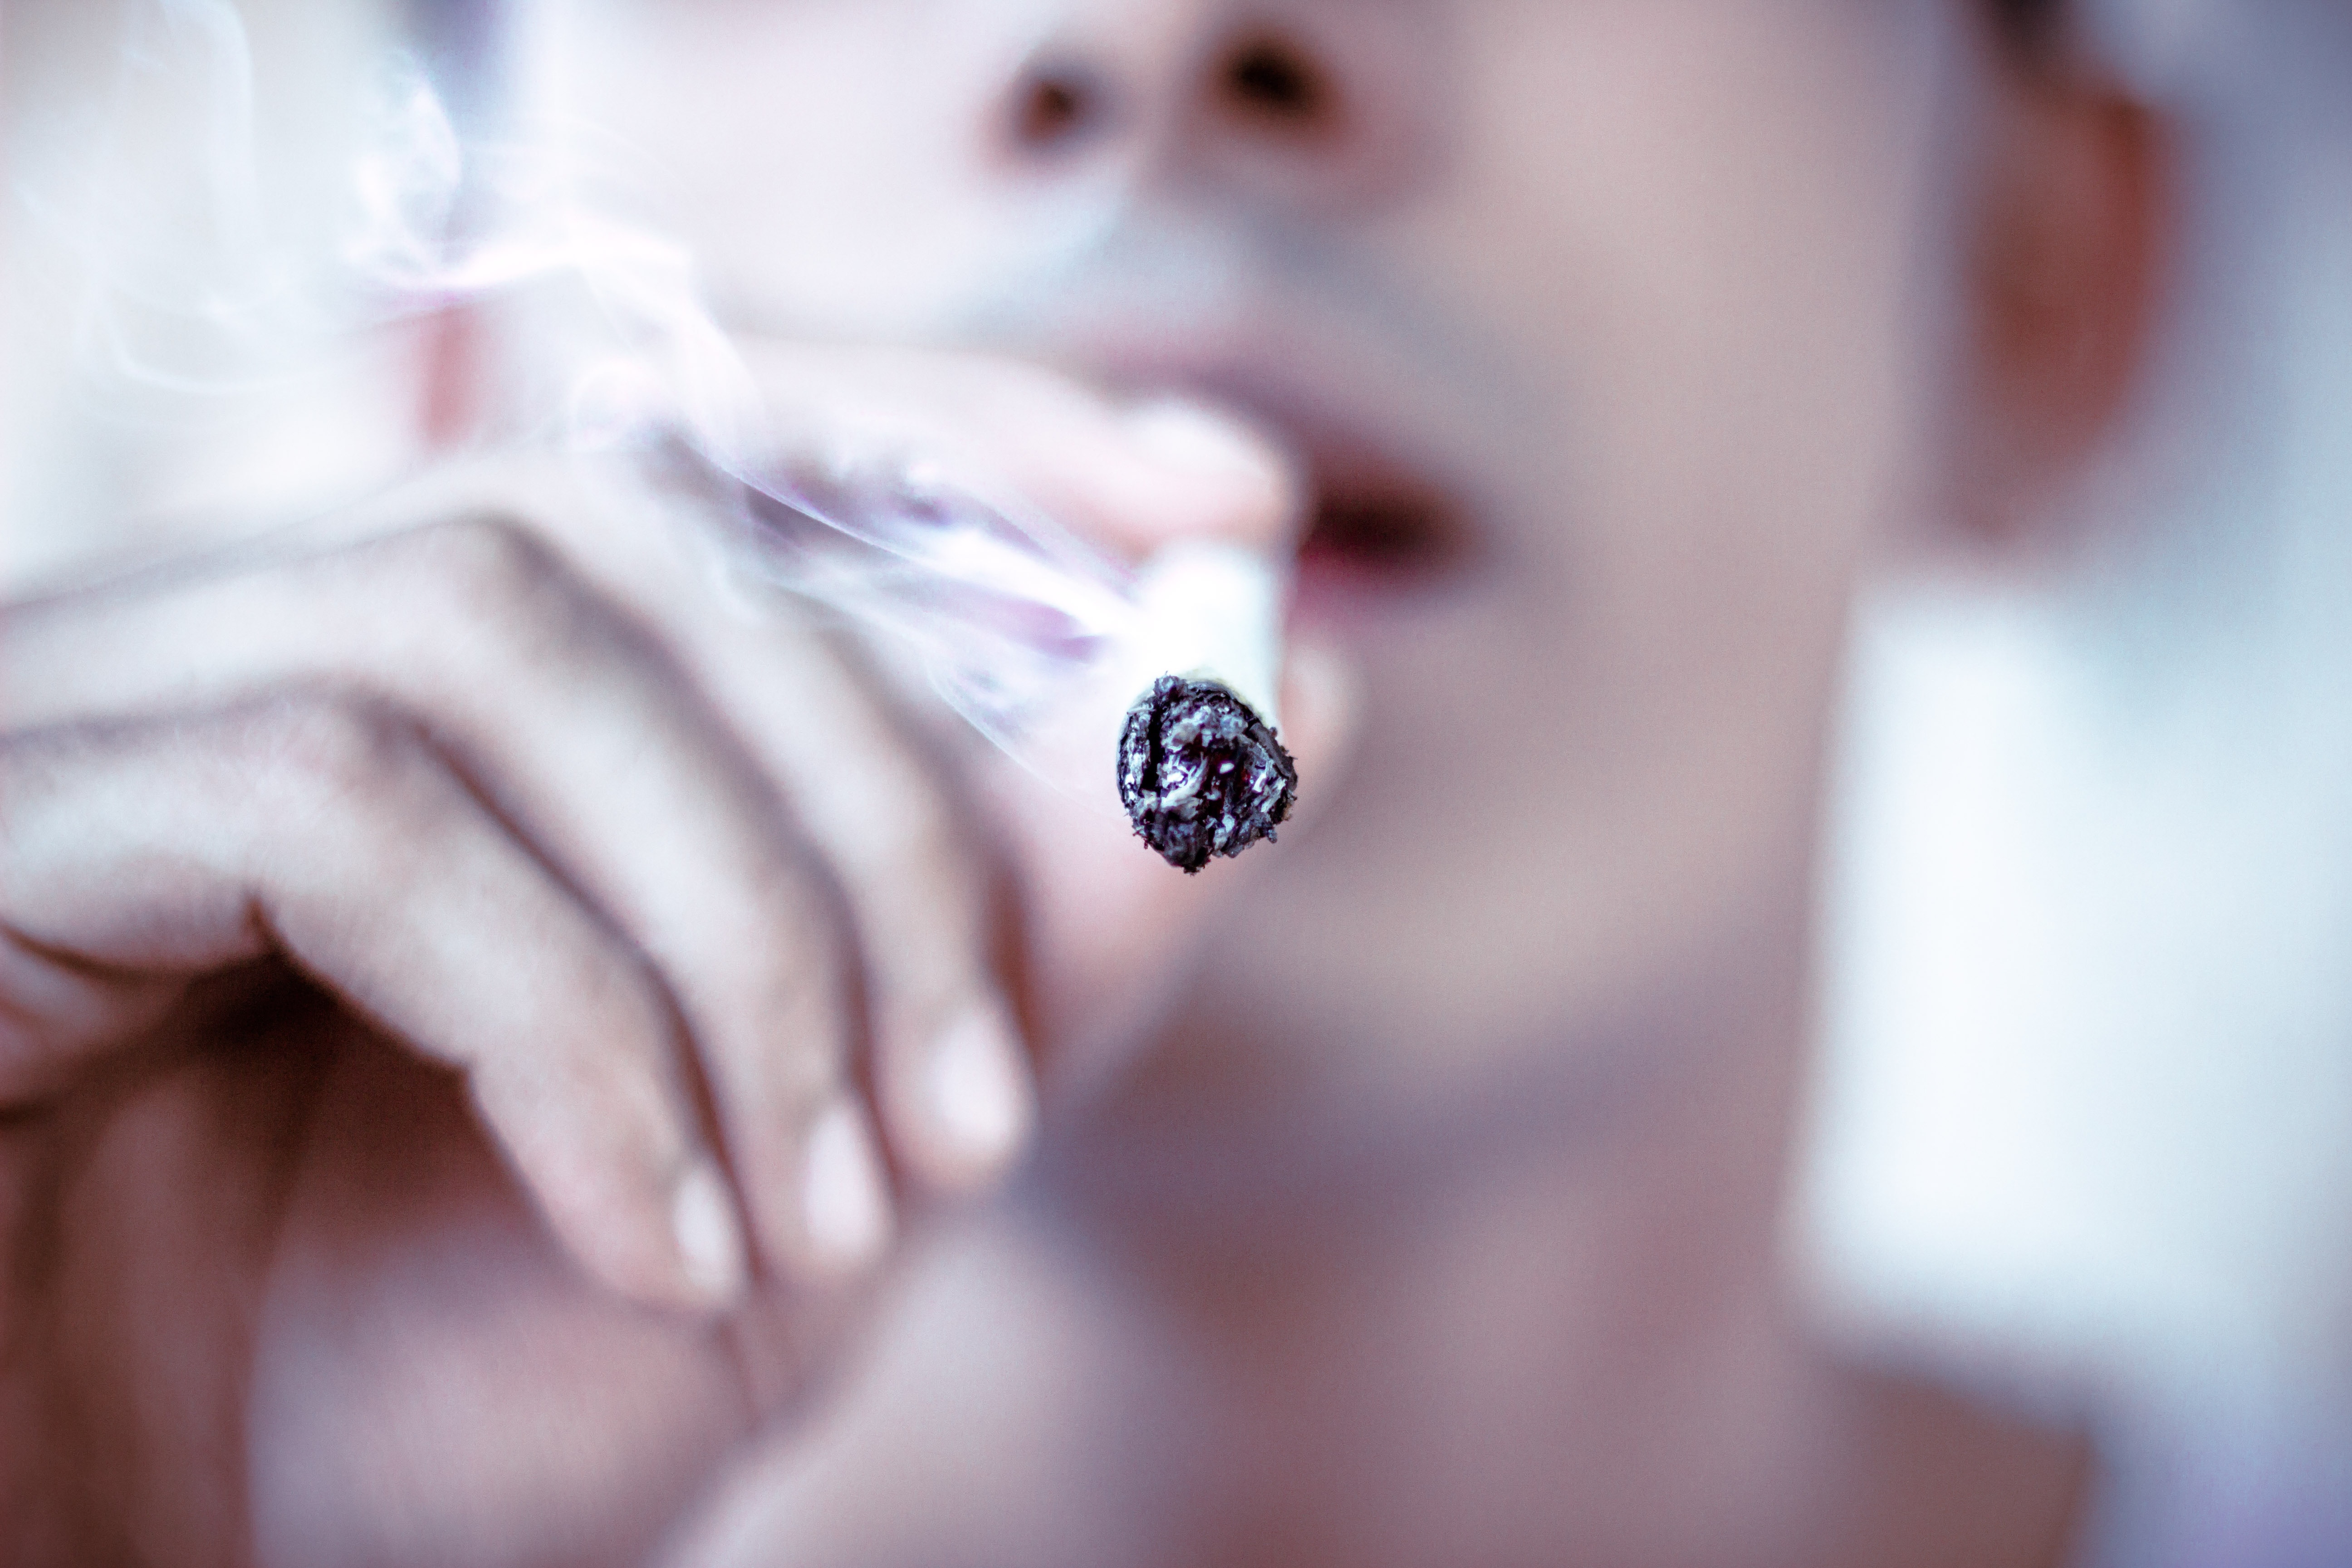 Ugly Truth Smoking Affects Brain like heroin addictive